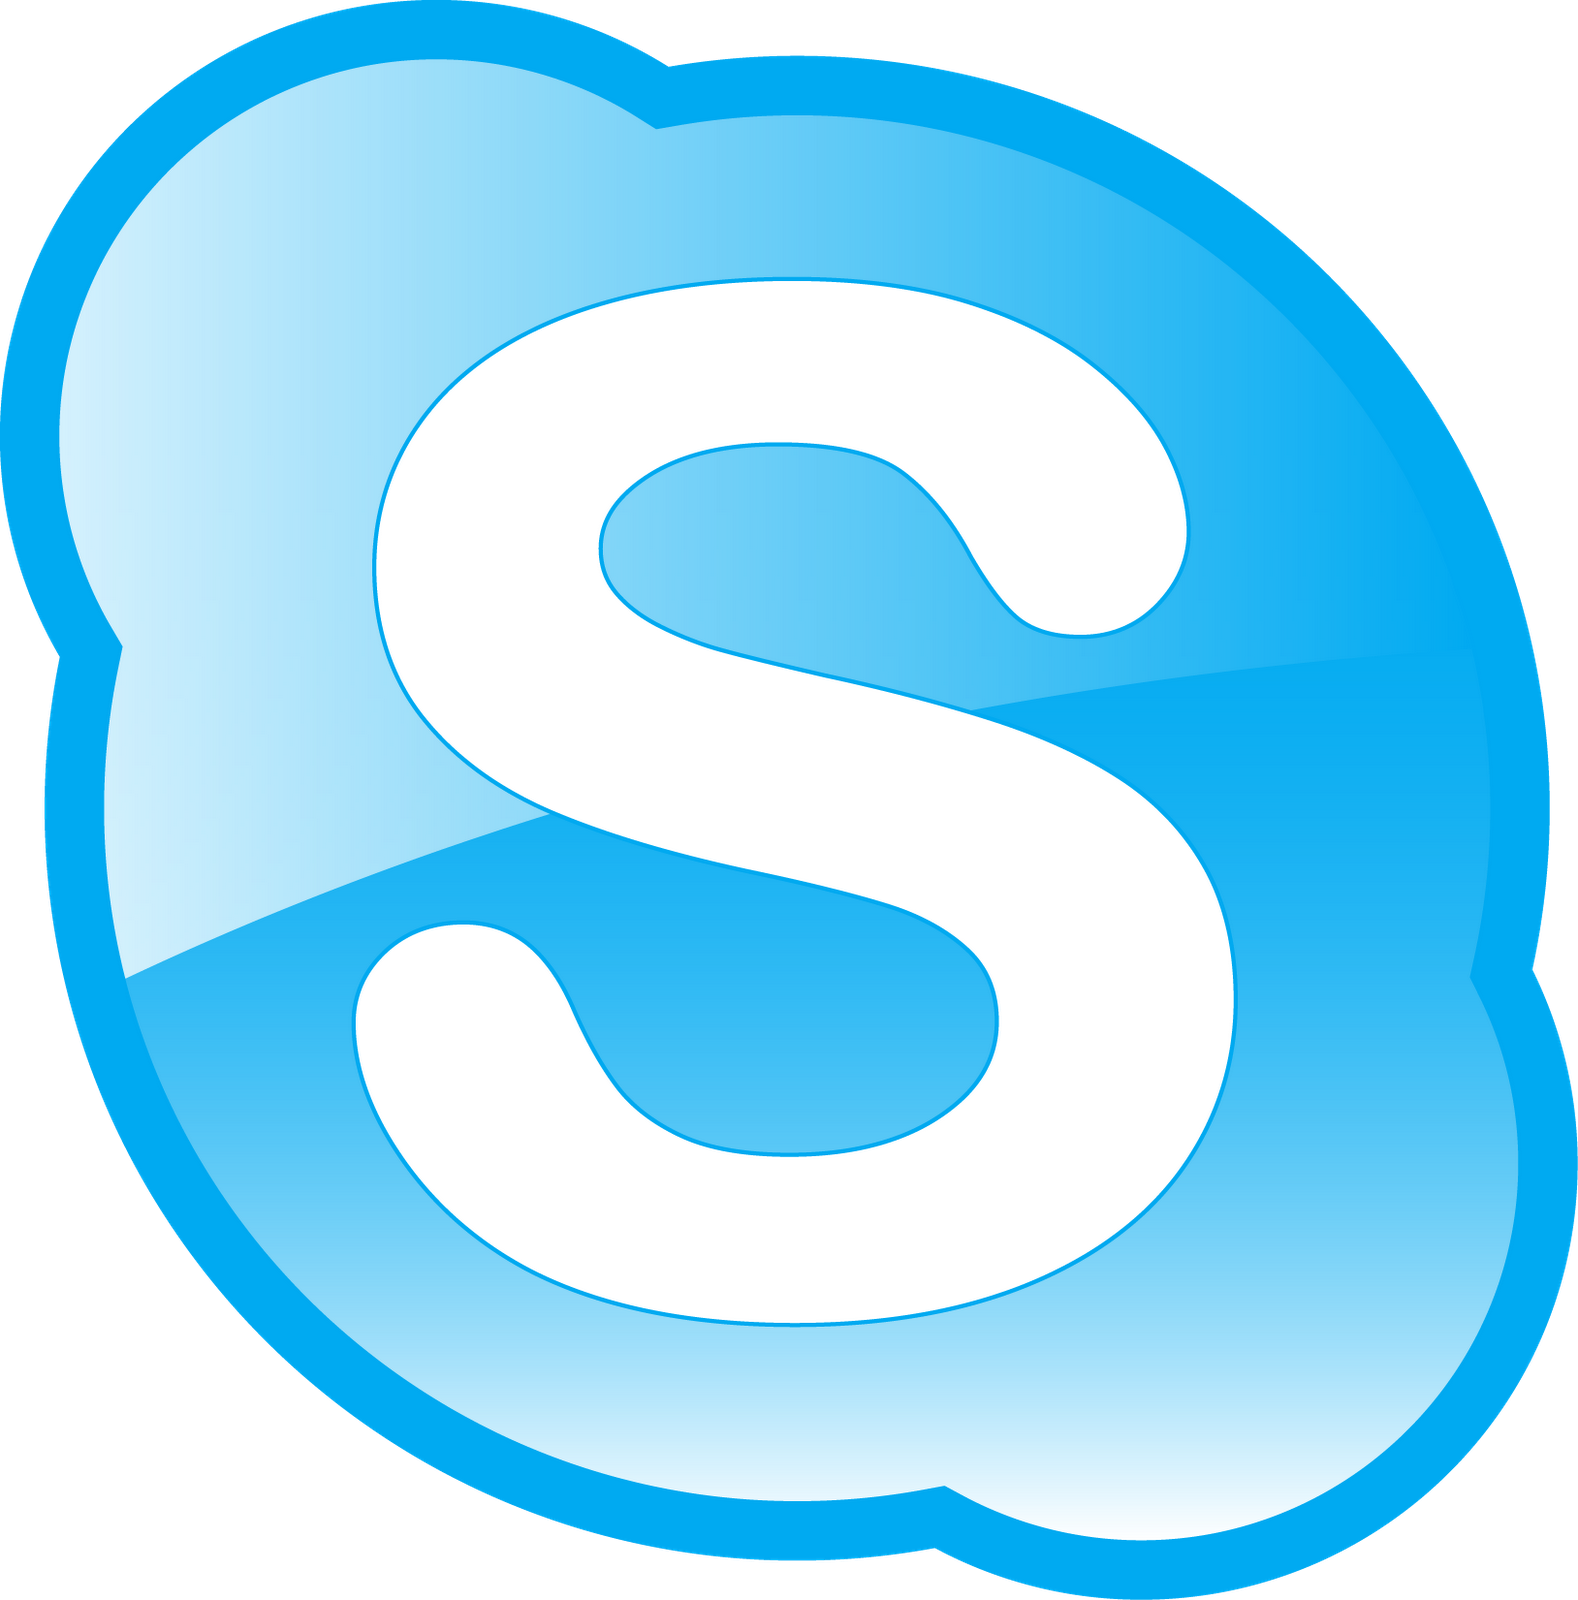 Skype logo PNG images Download 